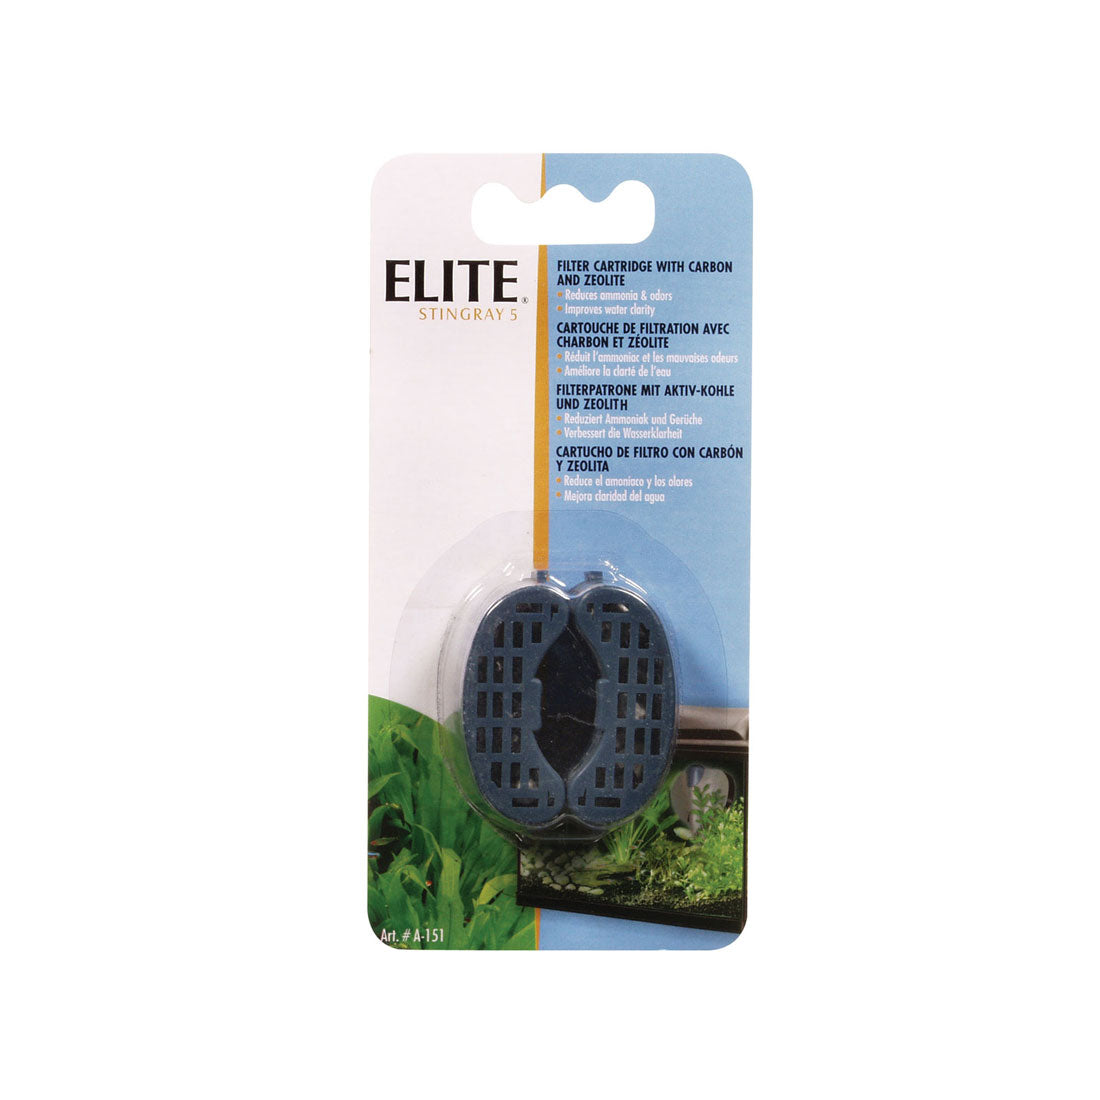 Elite Stingray 5 Carbon Cartridge